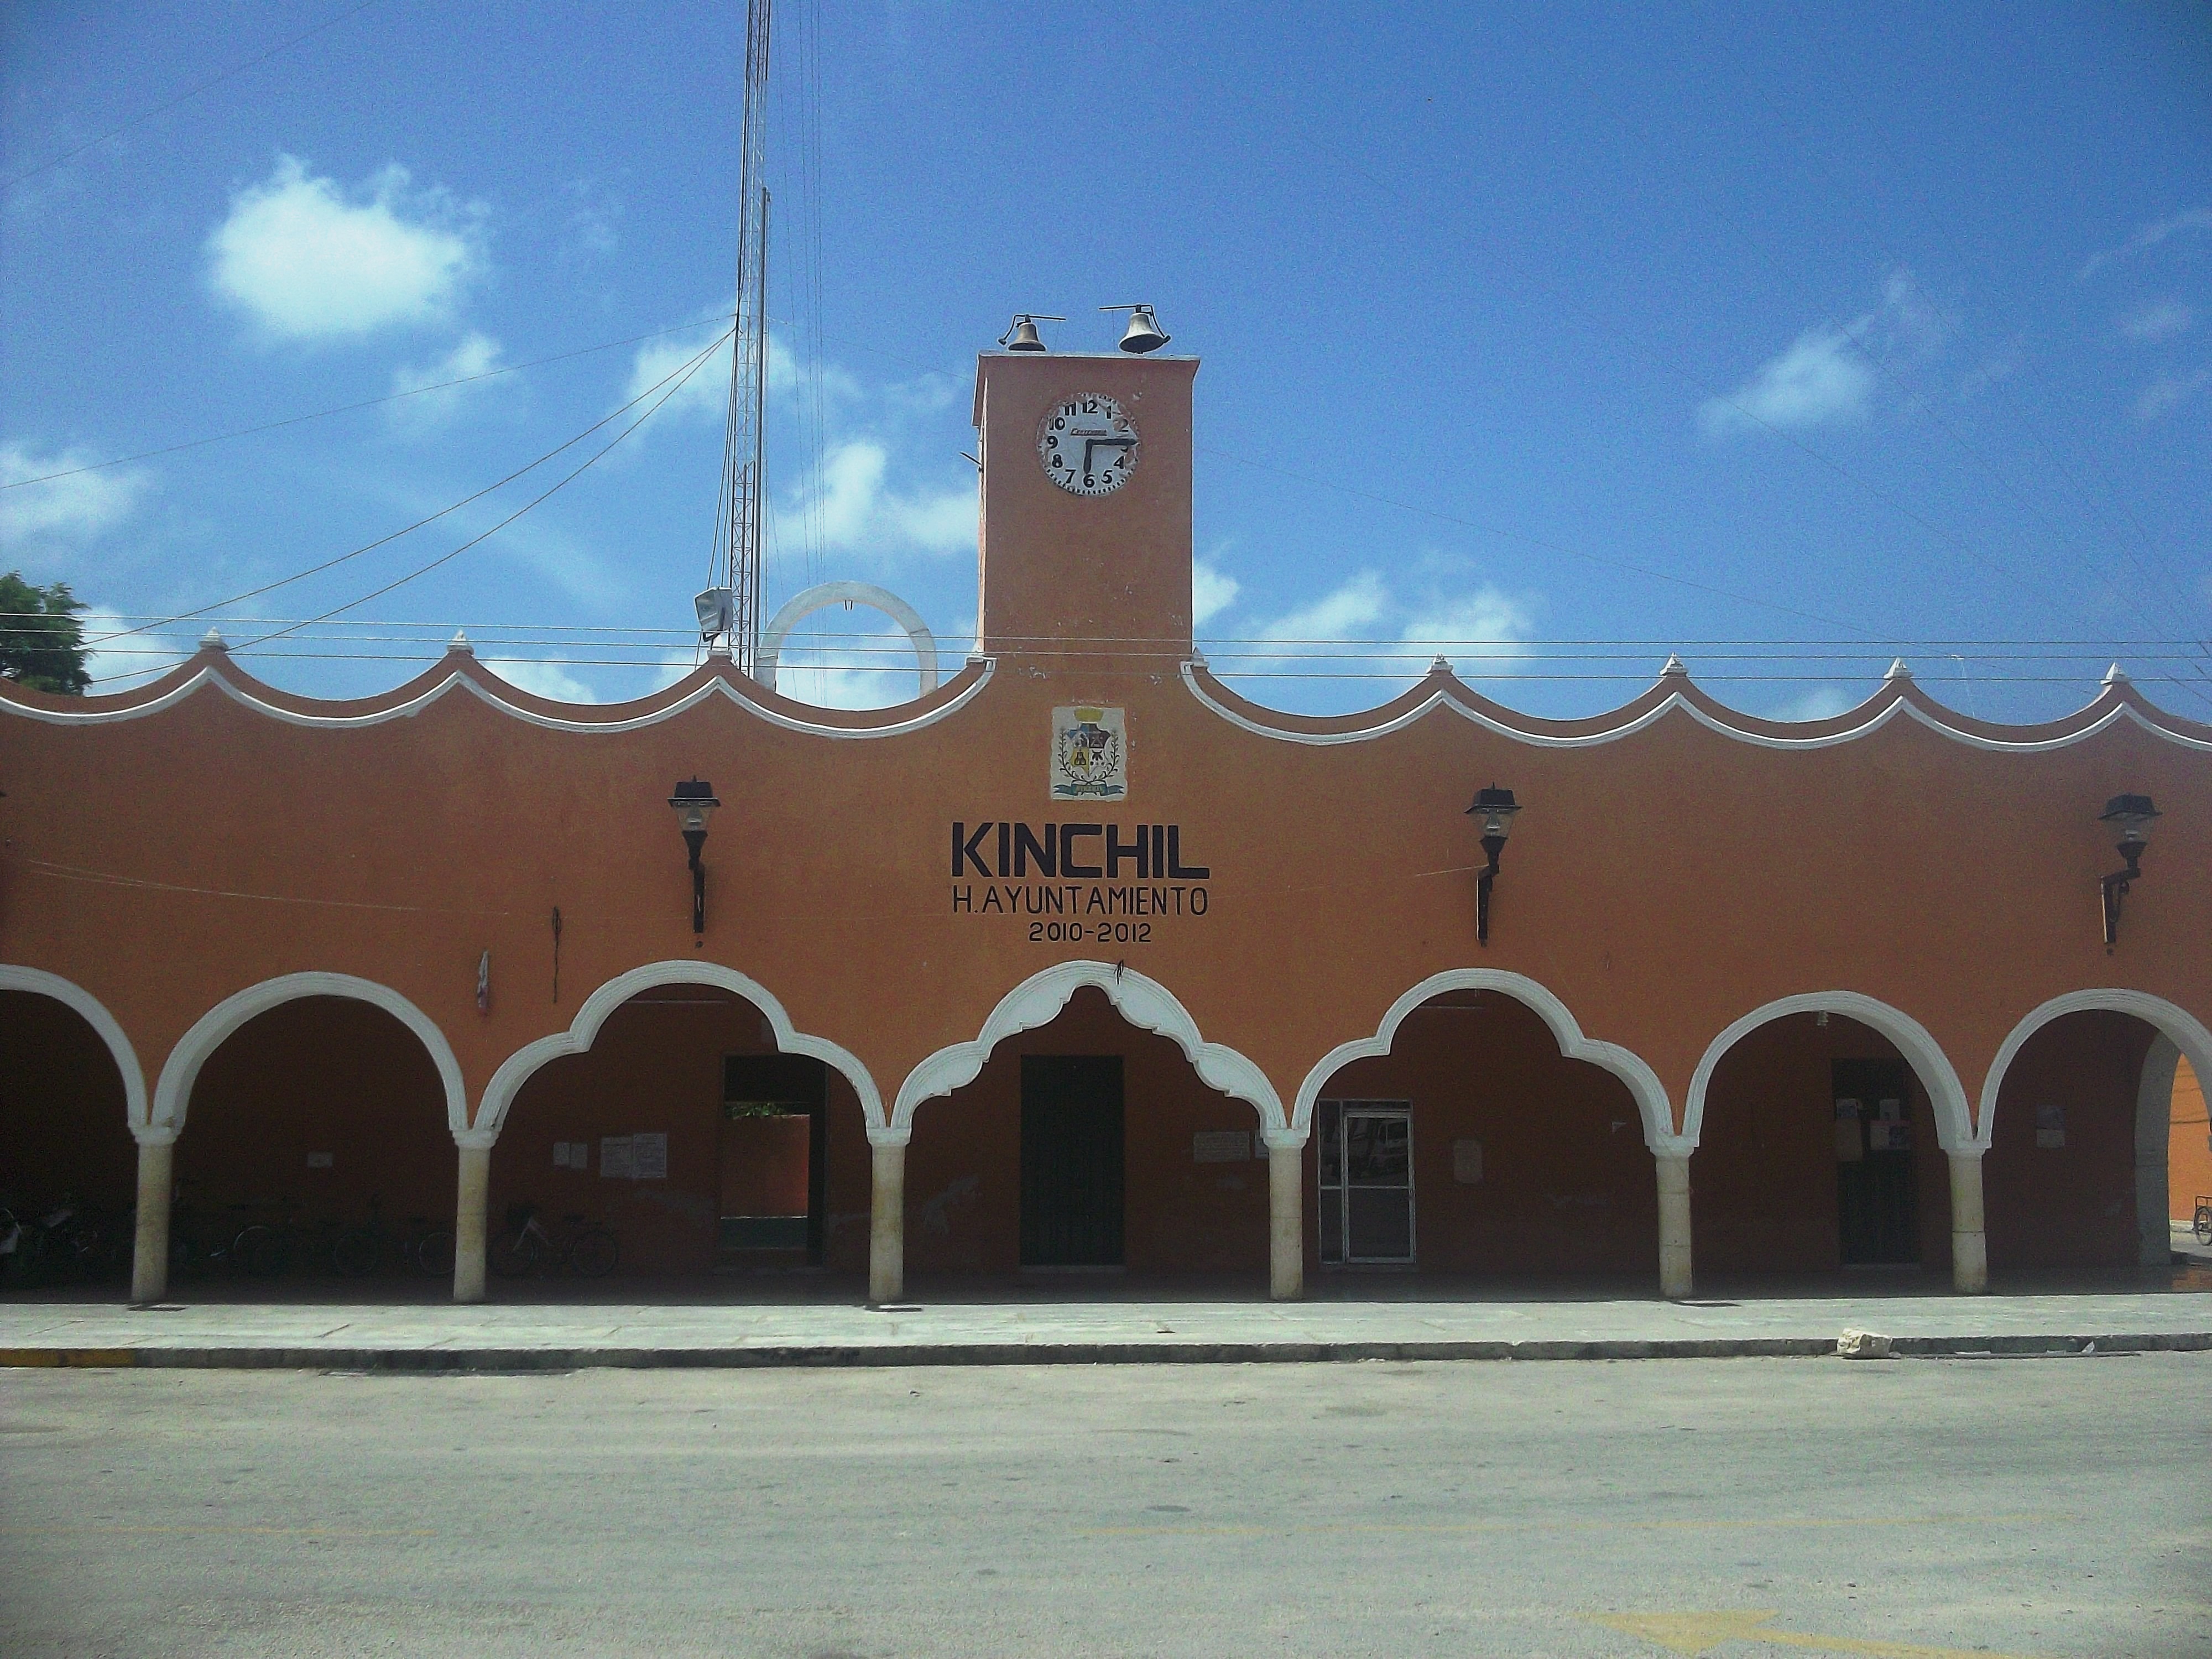 Kinchil